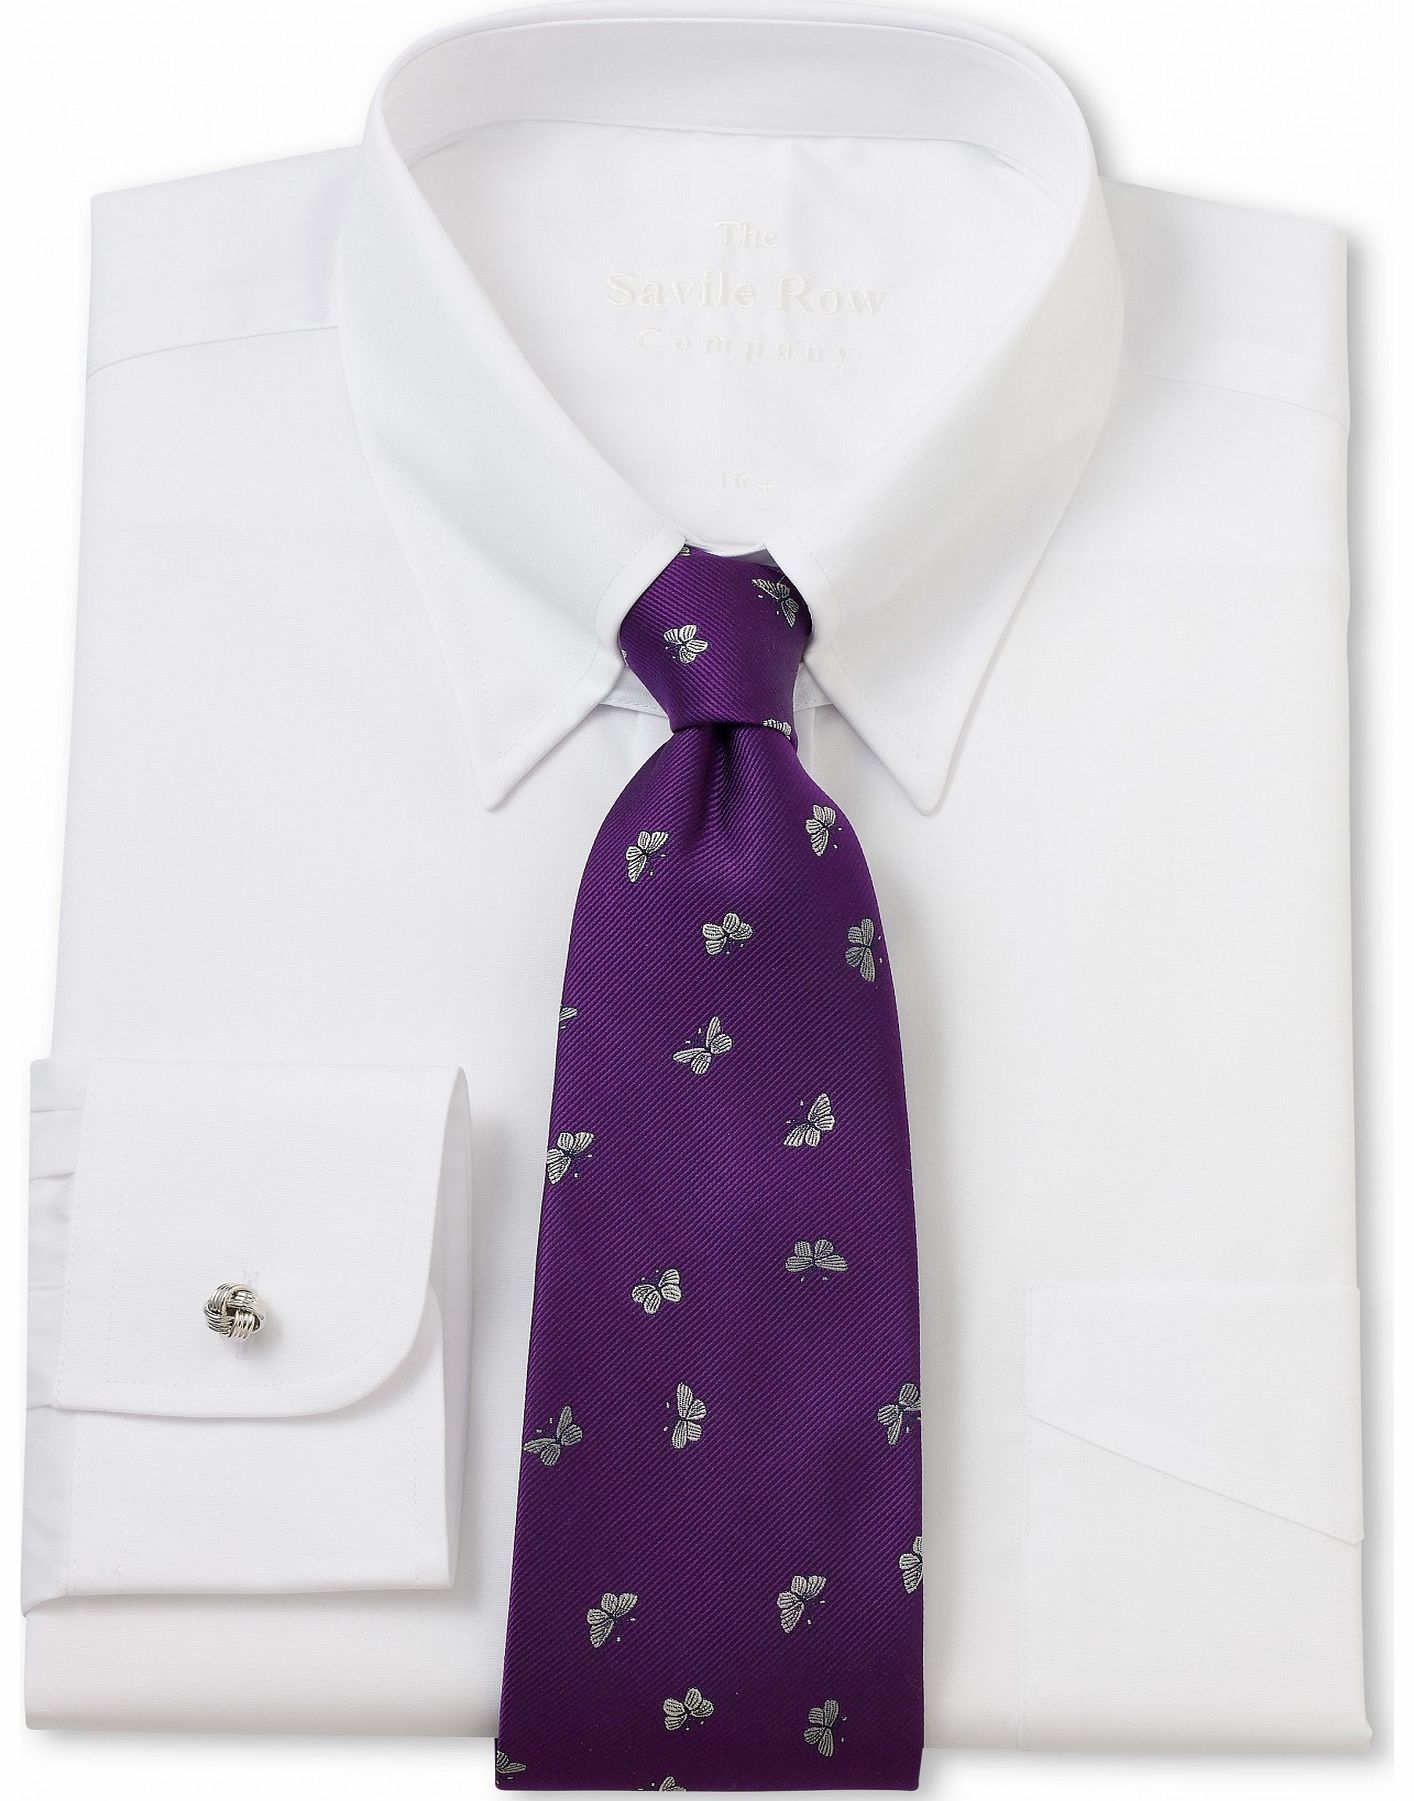 Savile Row Company White Poplin Tab Collar Classic Fit Shirt 16